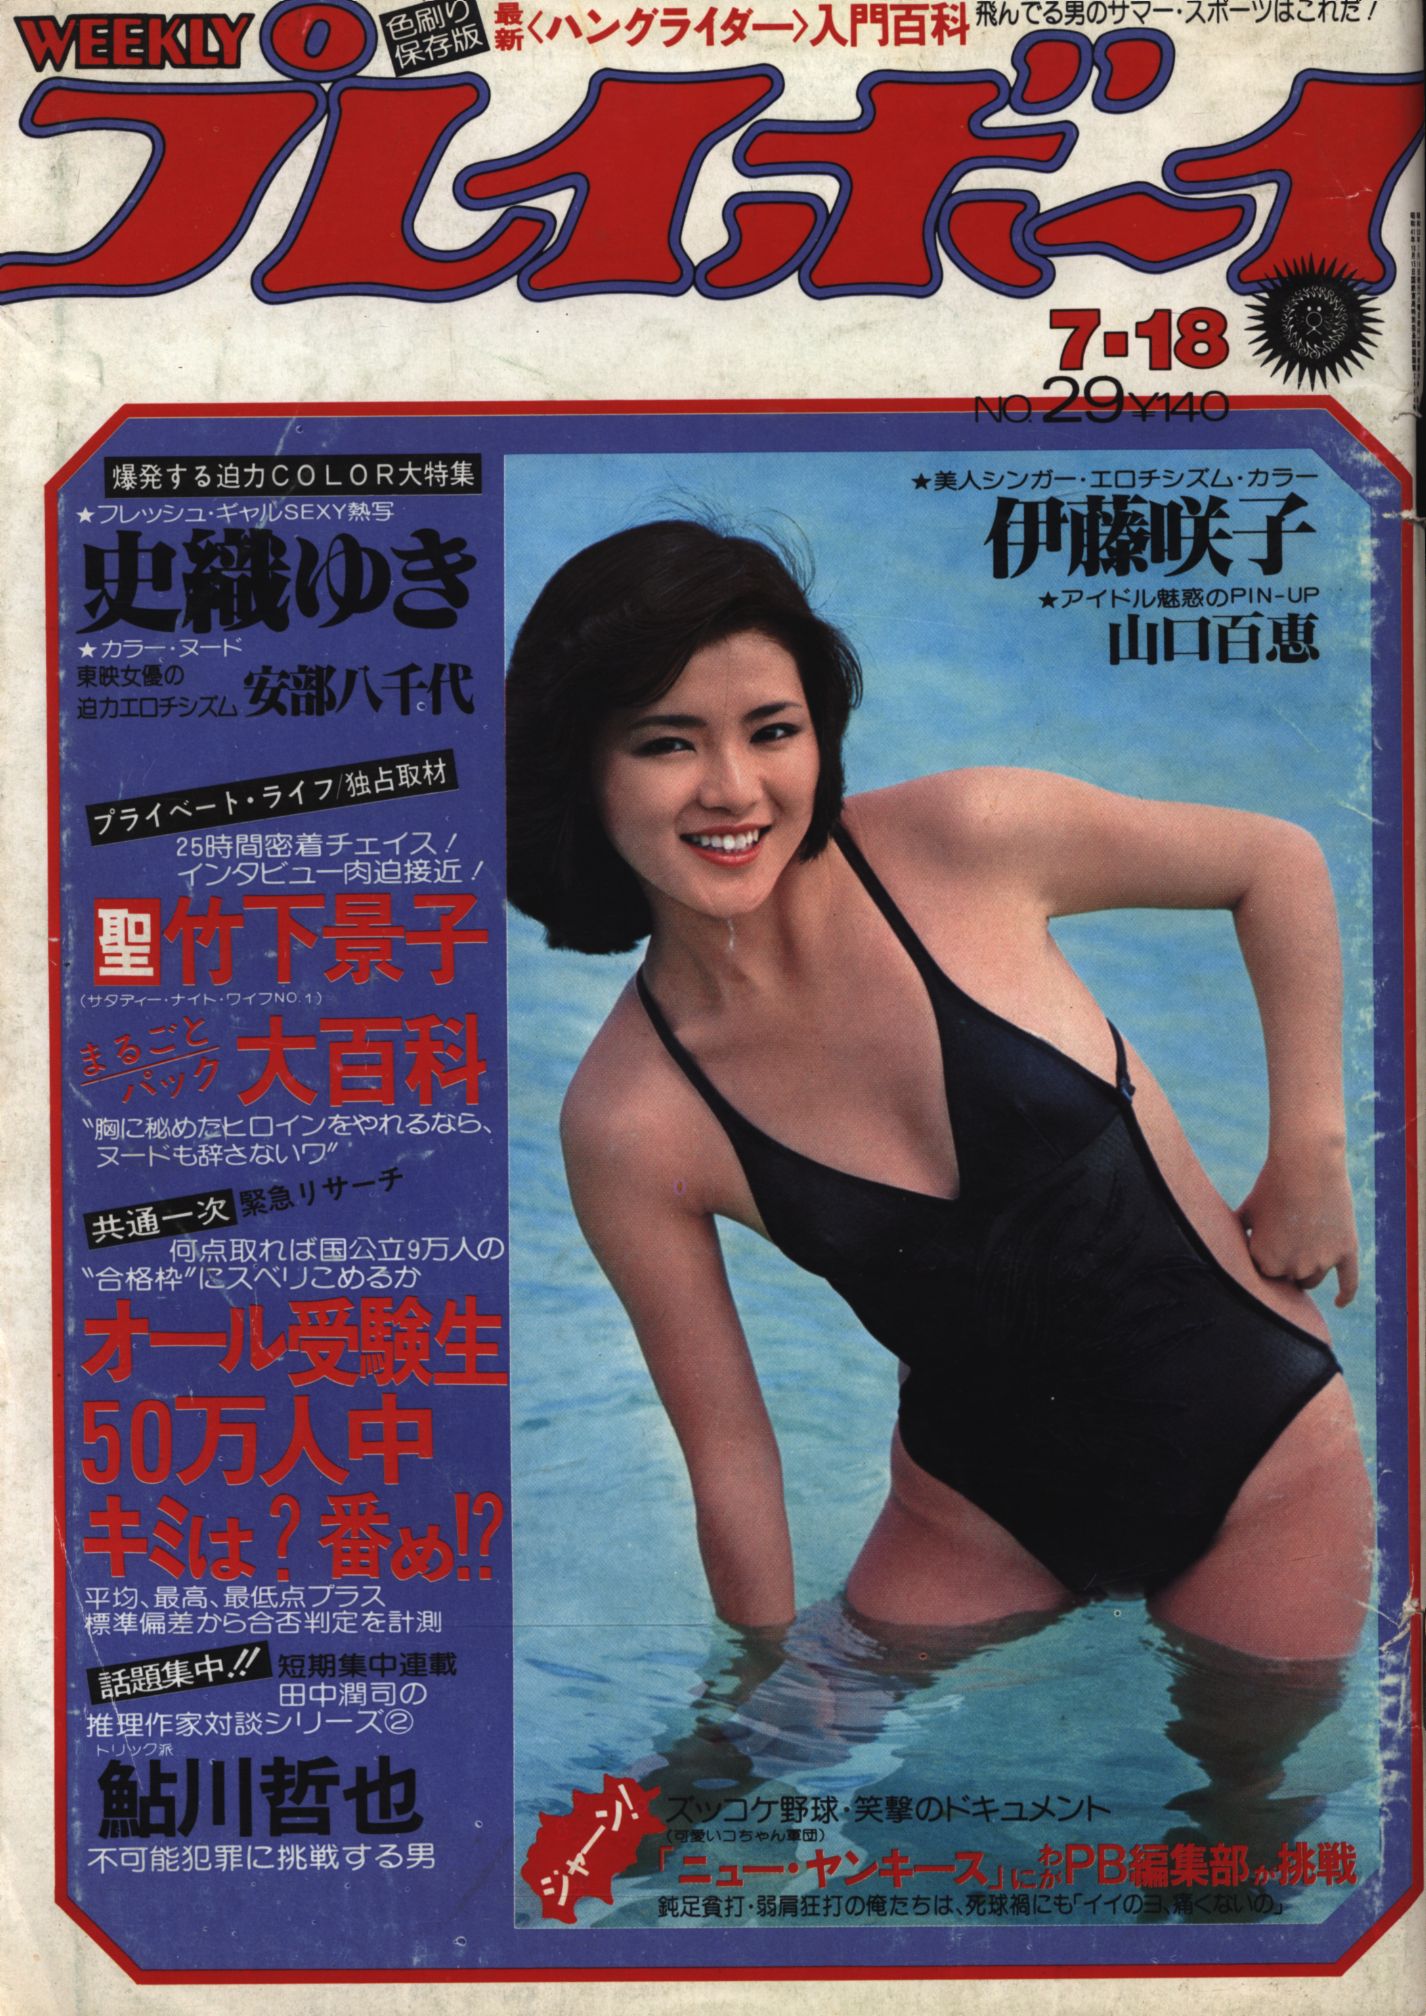 Weekly Playboy July Issue Mandarake Online Shop